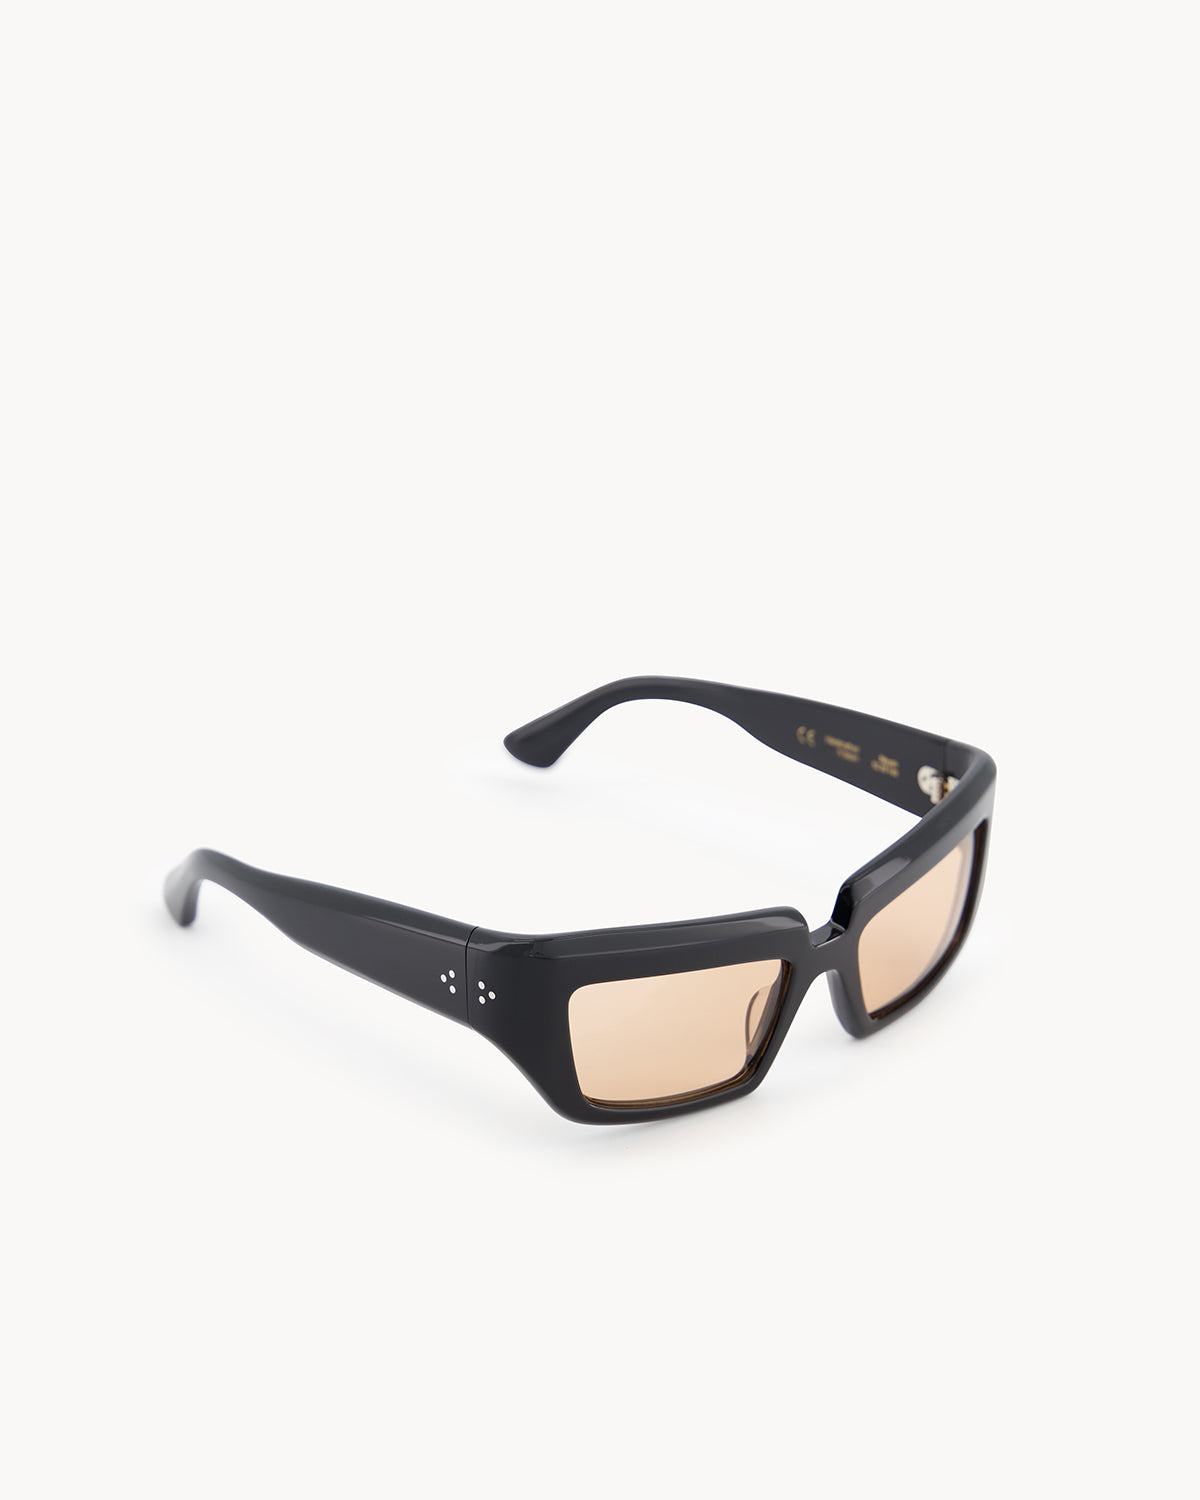 Port Tanger Niyyah Sunglasses in Black Acetate and Amber Lenses 2